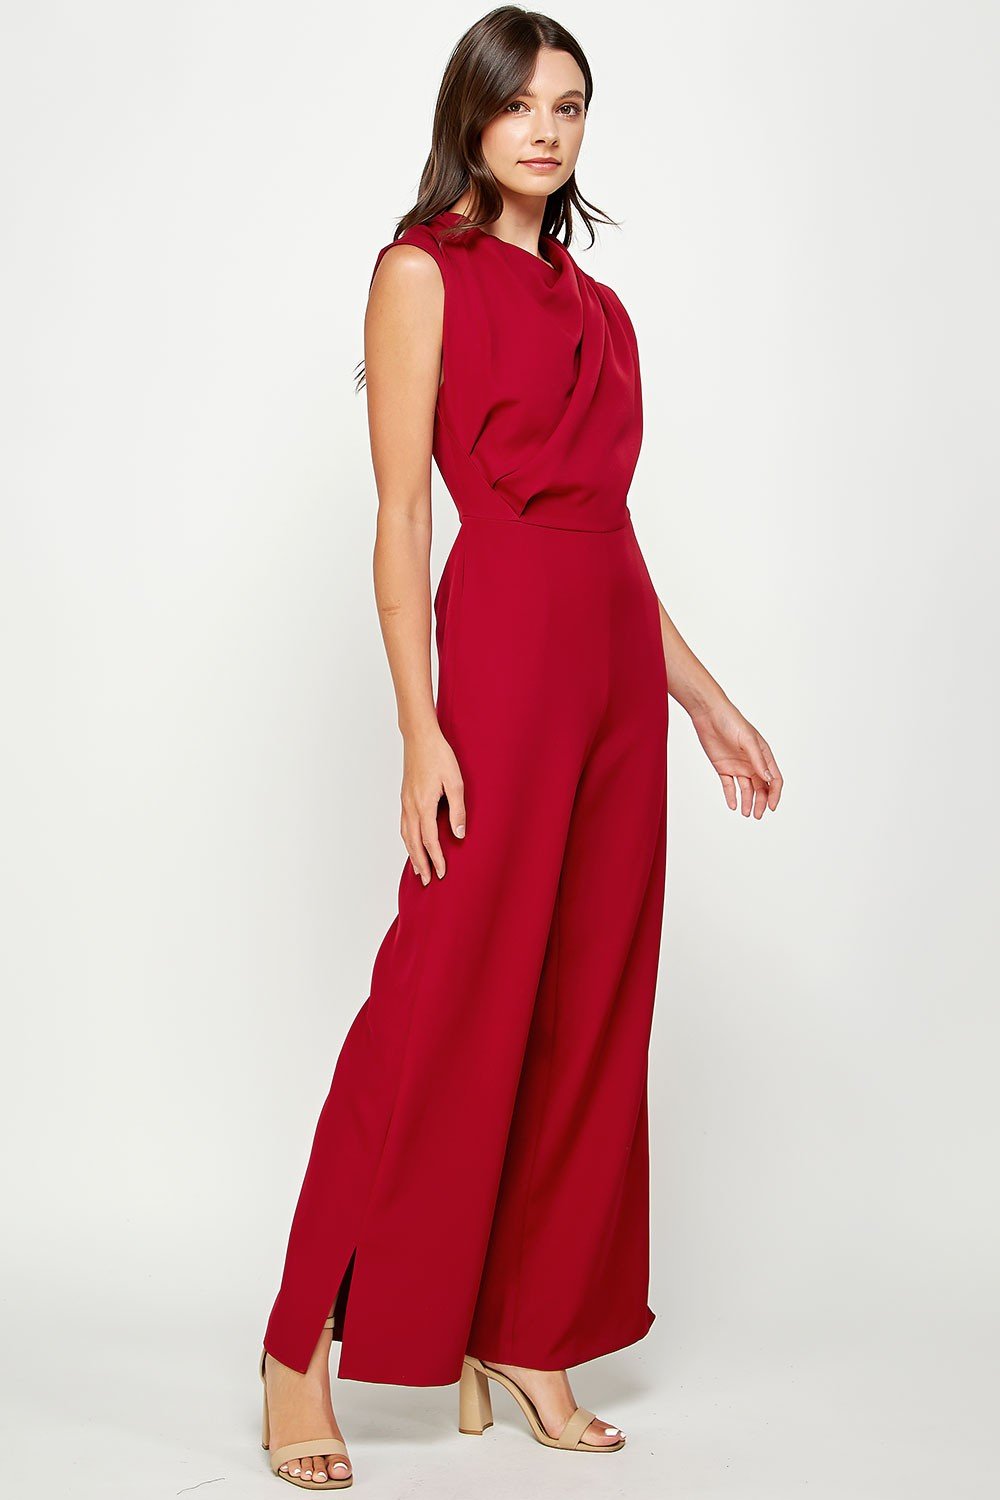 Ela - rojo - Cindel vestidos maxi, midi, mini, para toda ocasion, largos, de fiesta, de boda